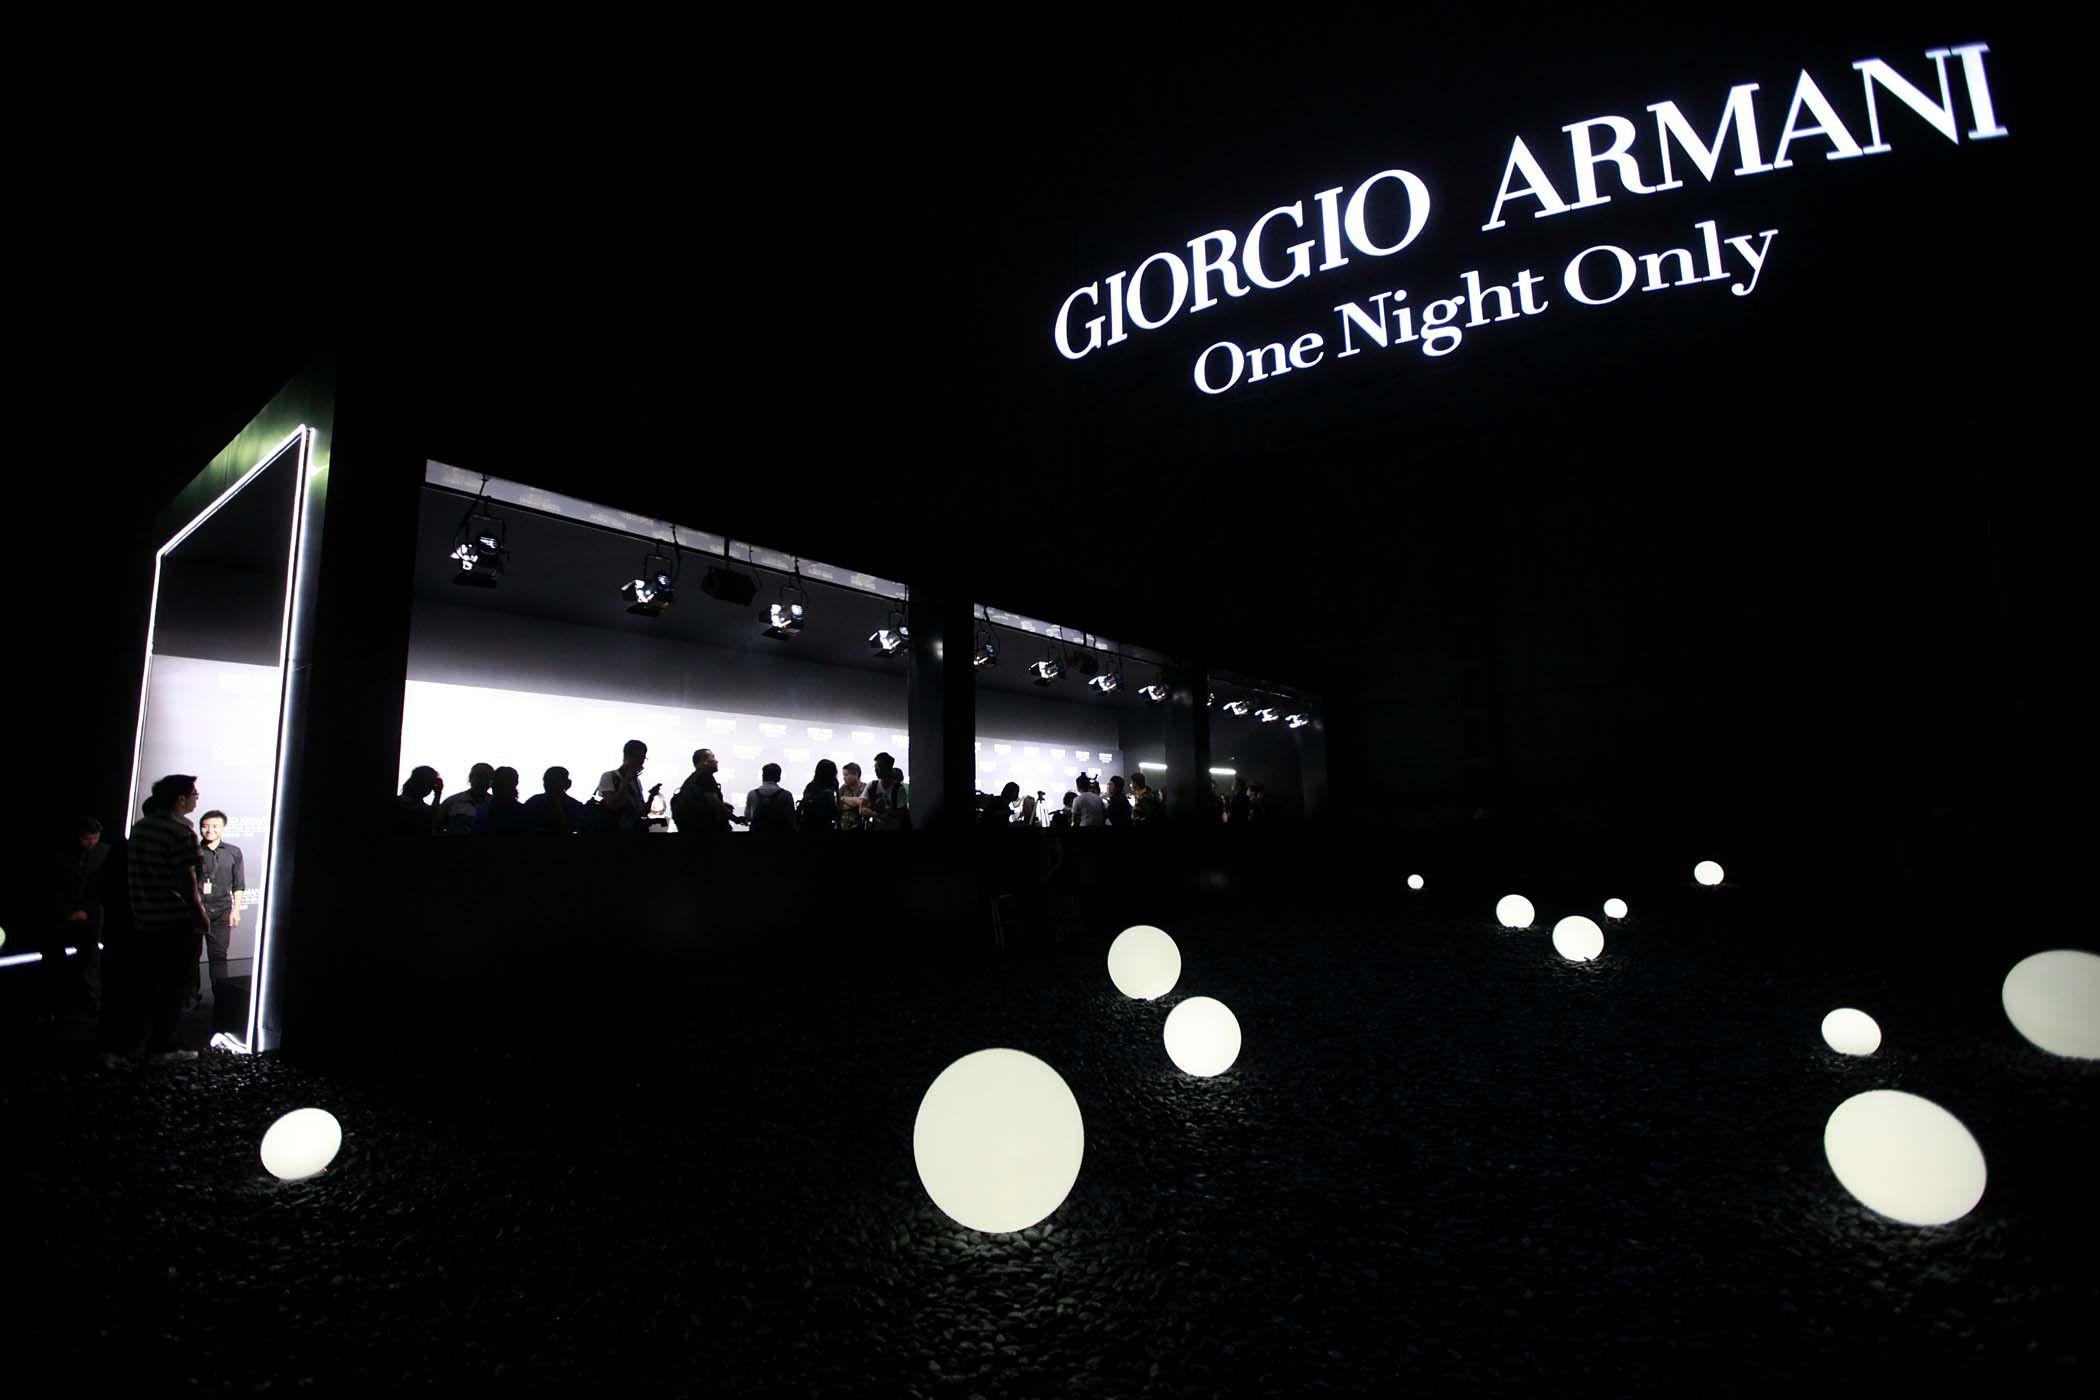 Giorgio Armani clothing sale wallpaper and image